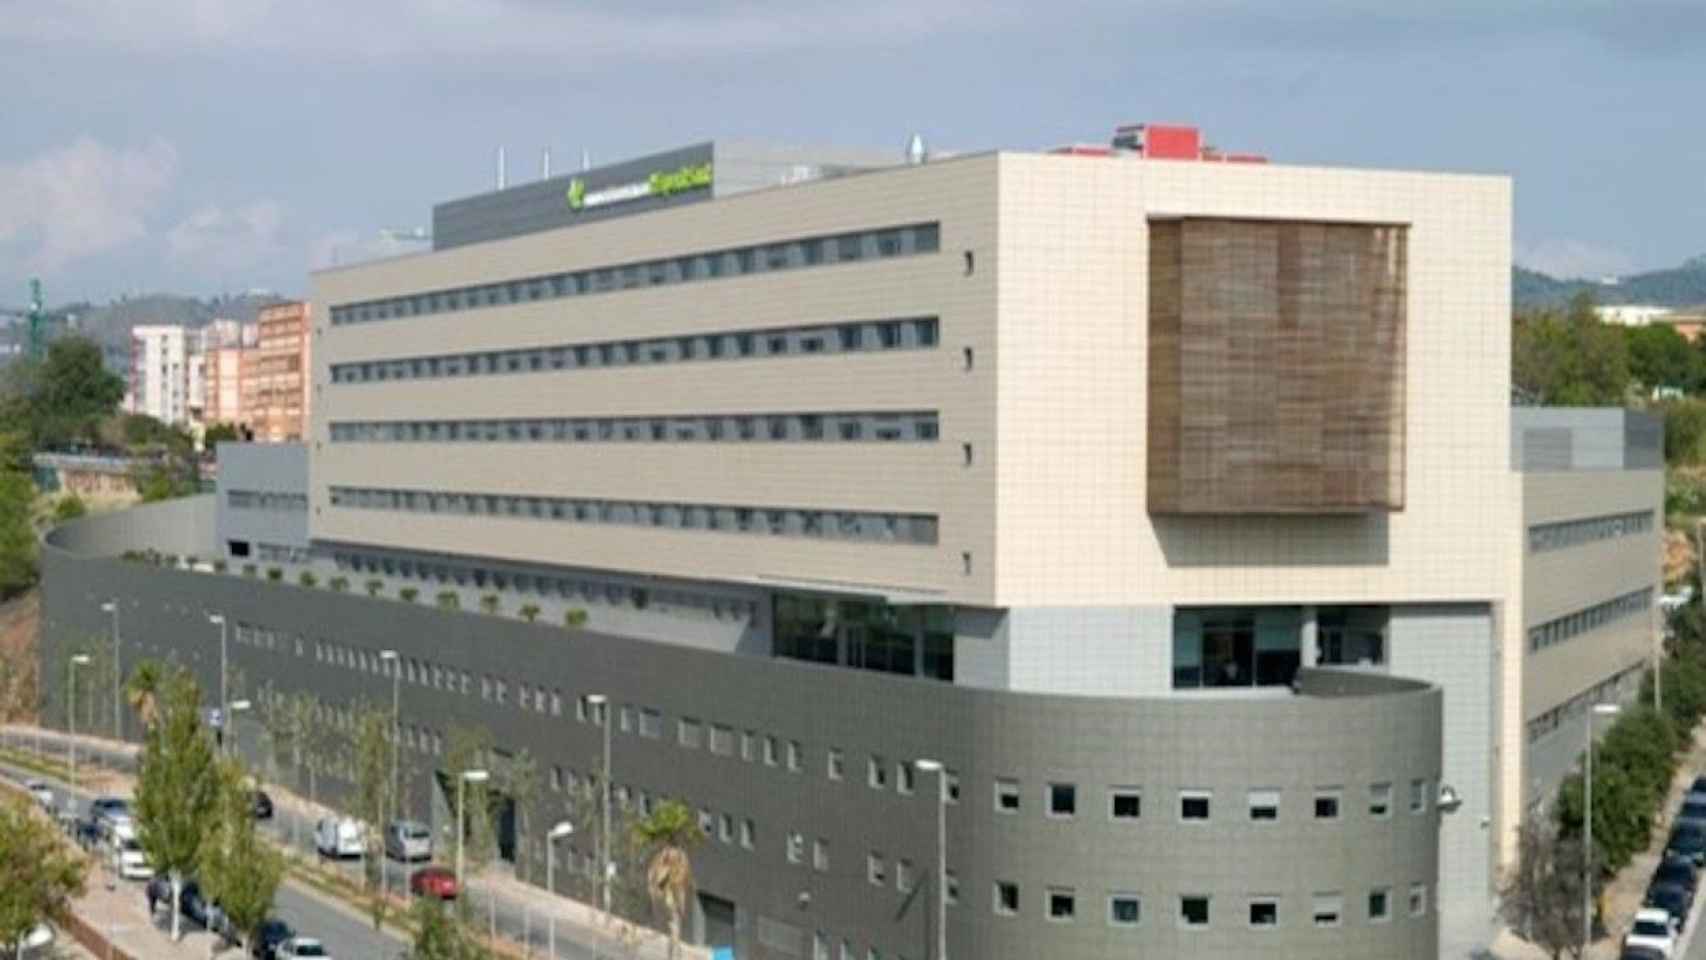 El Hospital Esperit Sant, en Santa Coloma de Gramenet, donde se ha detectado un posible caso de coronavirus